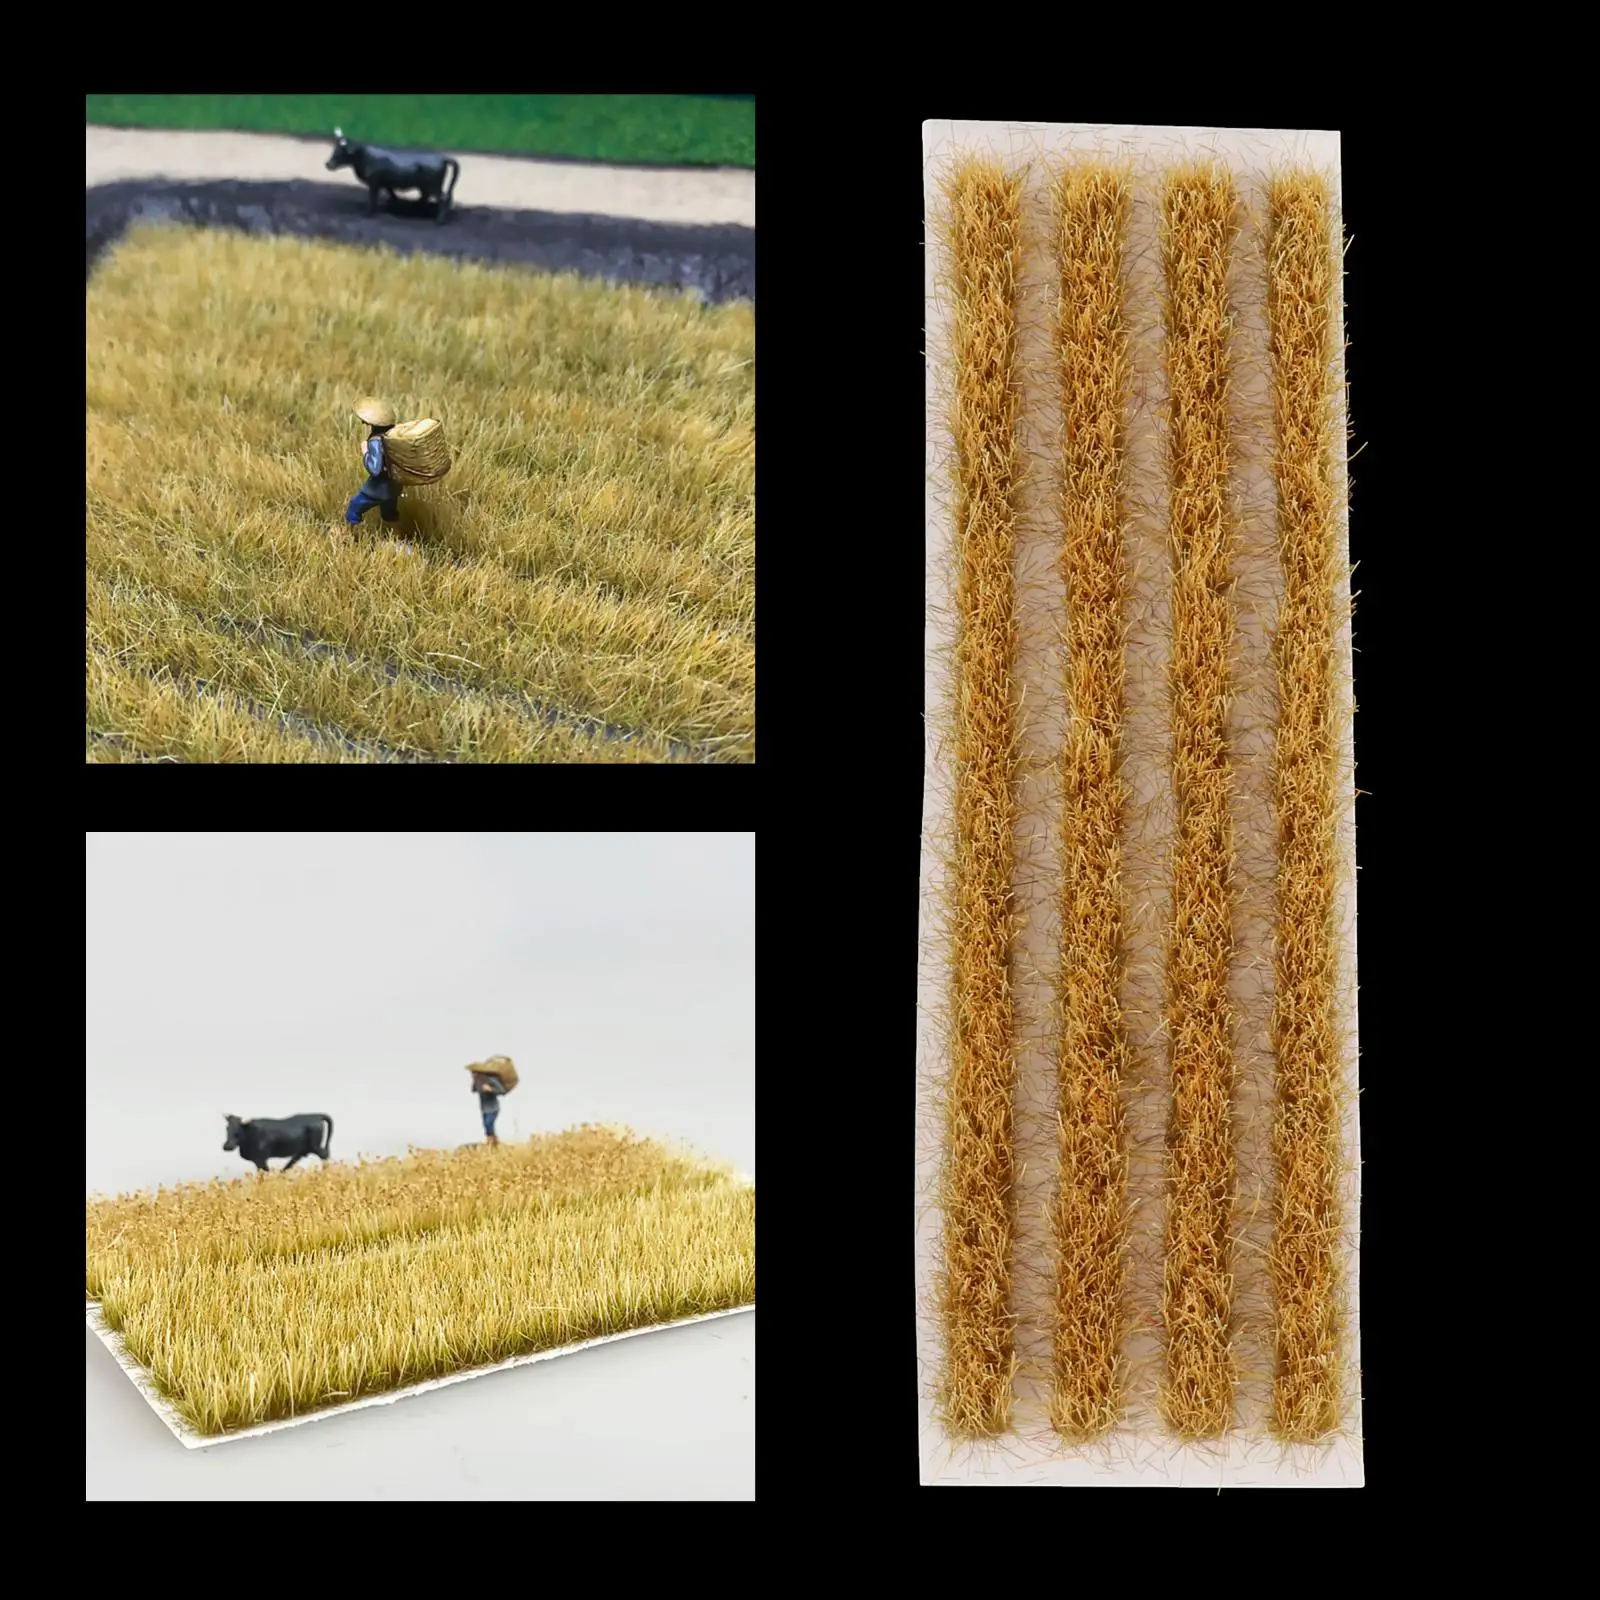 1:72-87 DIY Miniature Wheat Field Model Kit For Railway Artificial Terrain Static Landscape Railroad Scenery Accessory